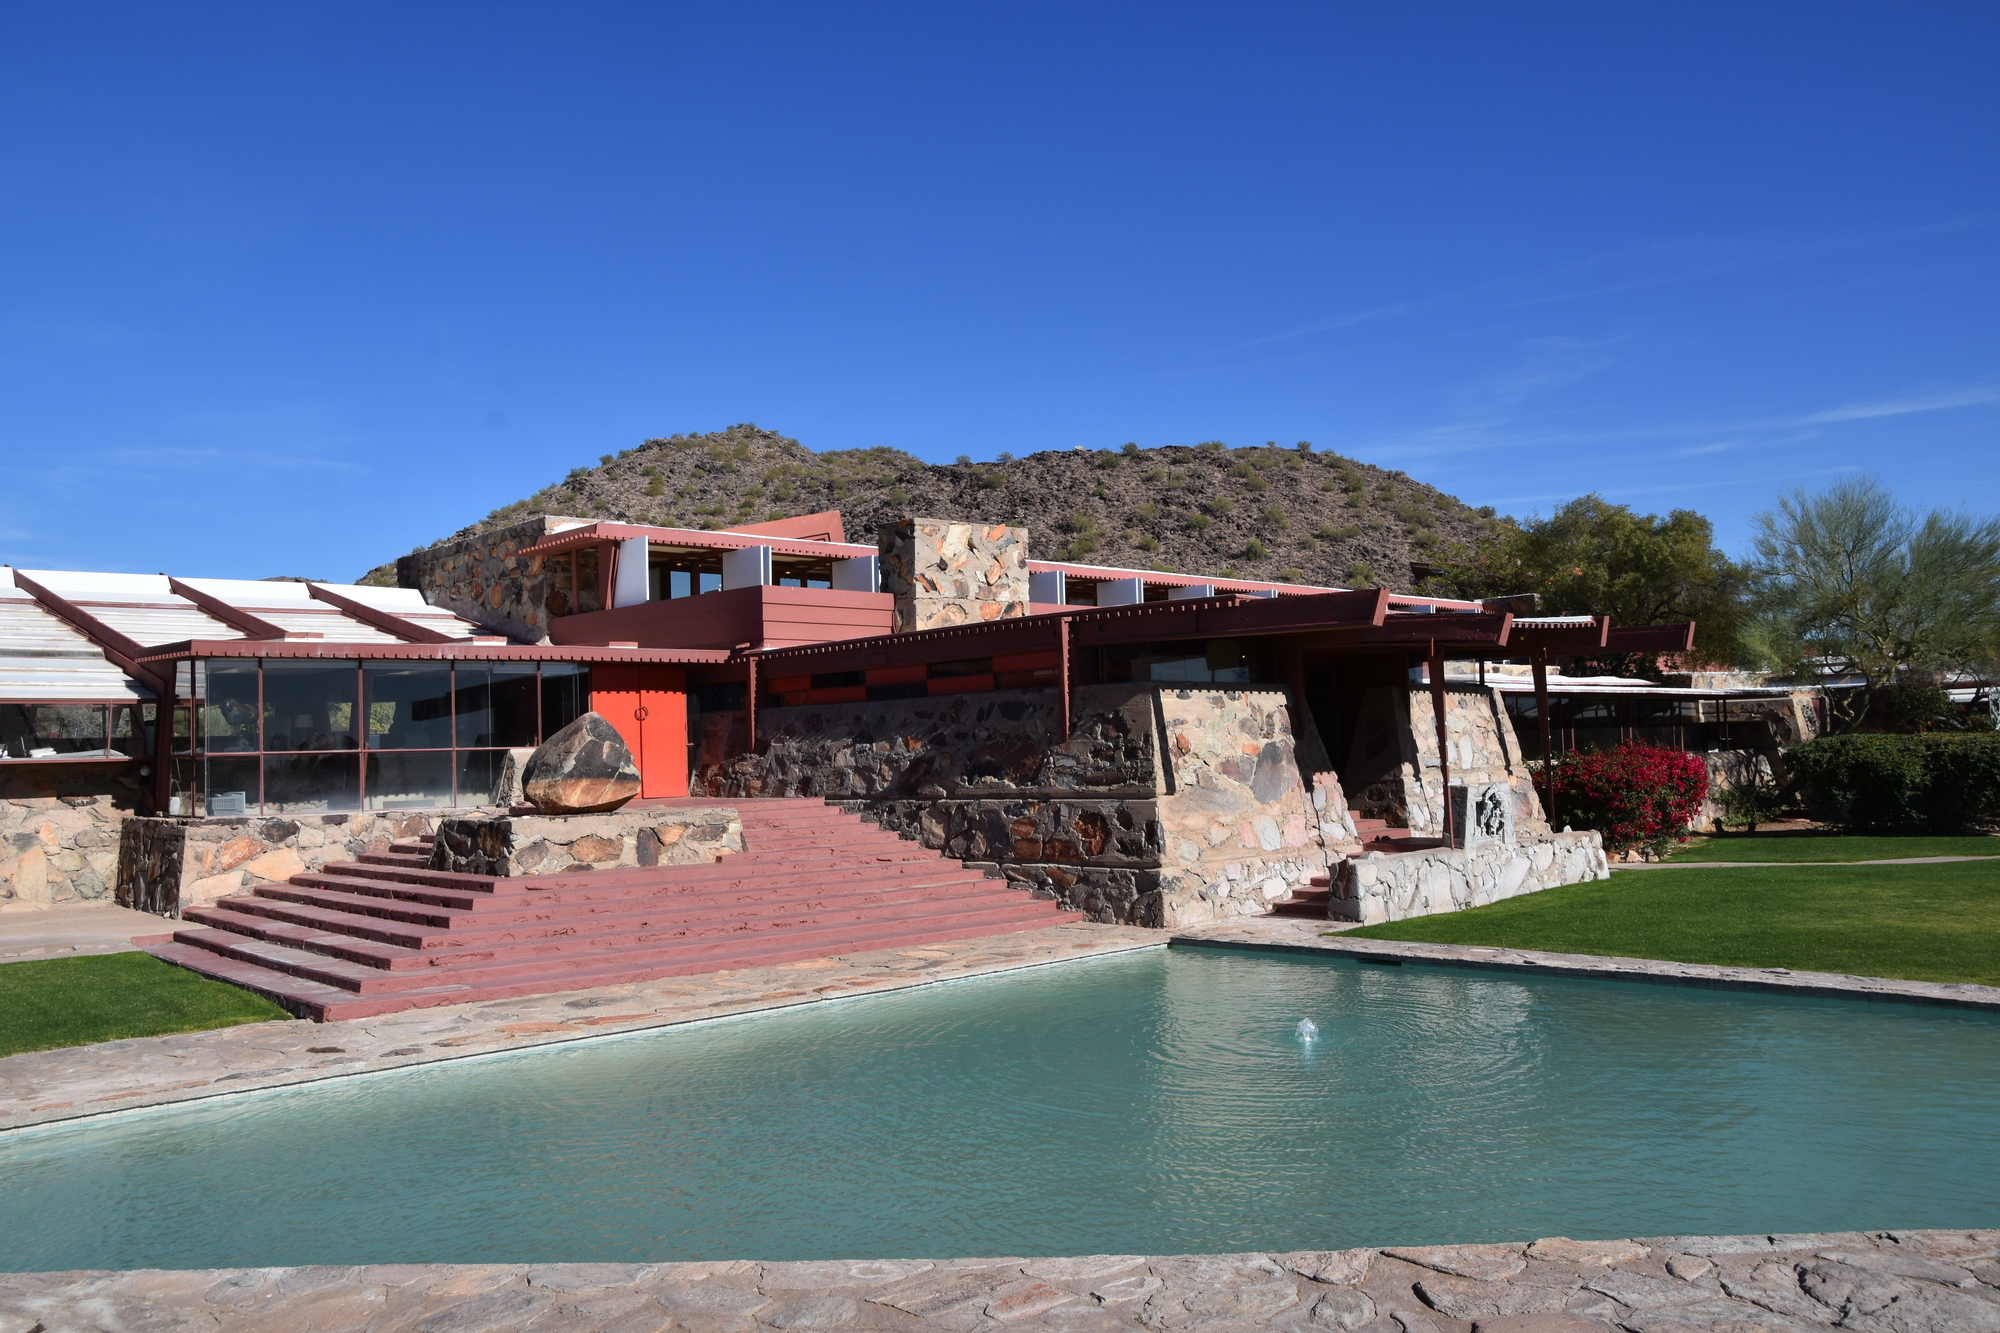 Taliesin West, Frank Lloyd Wright's winter home and studio in Scottsdale, Arizona